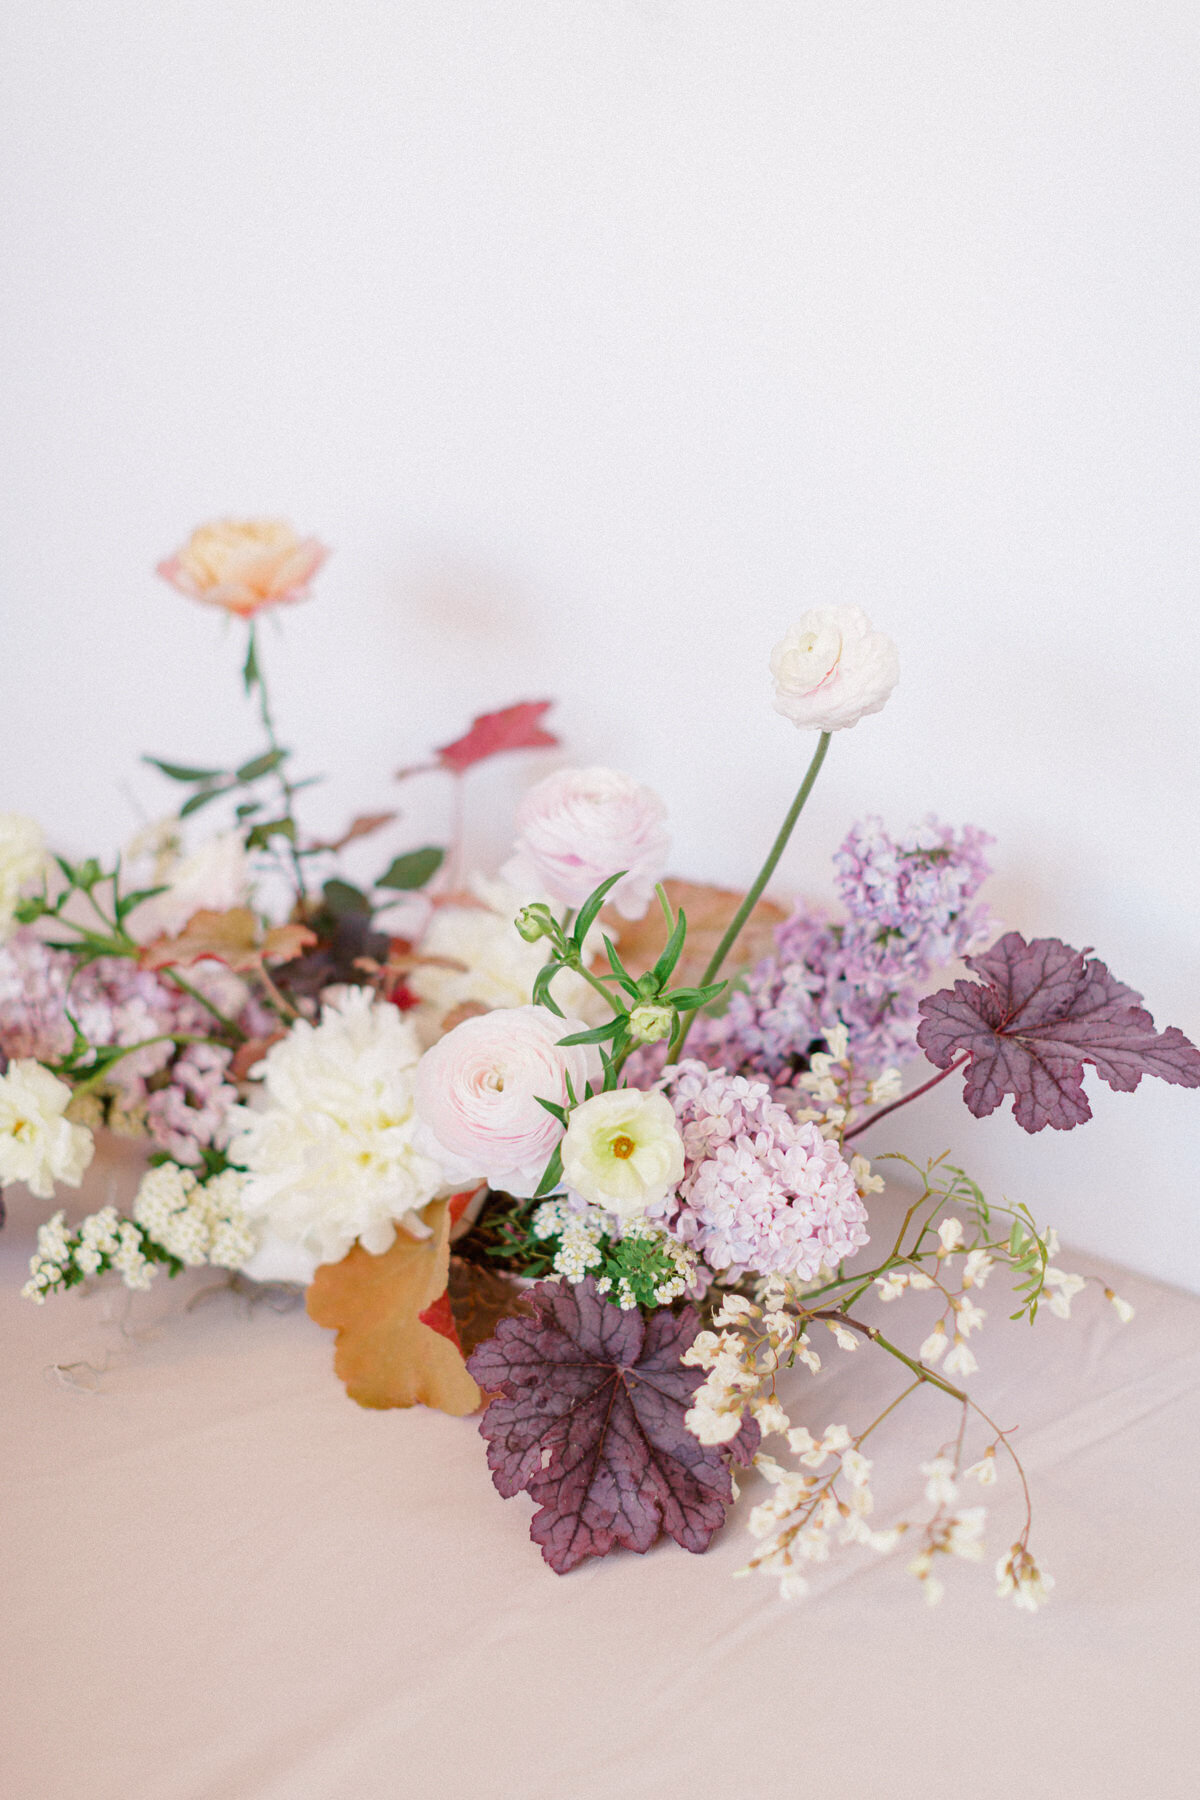 Atelier-Carmel-Wedding-Florist-GALLERY-Arrangements-47